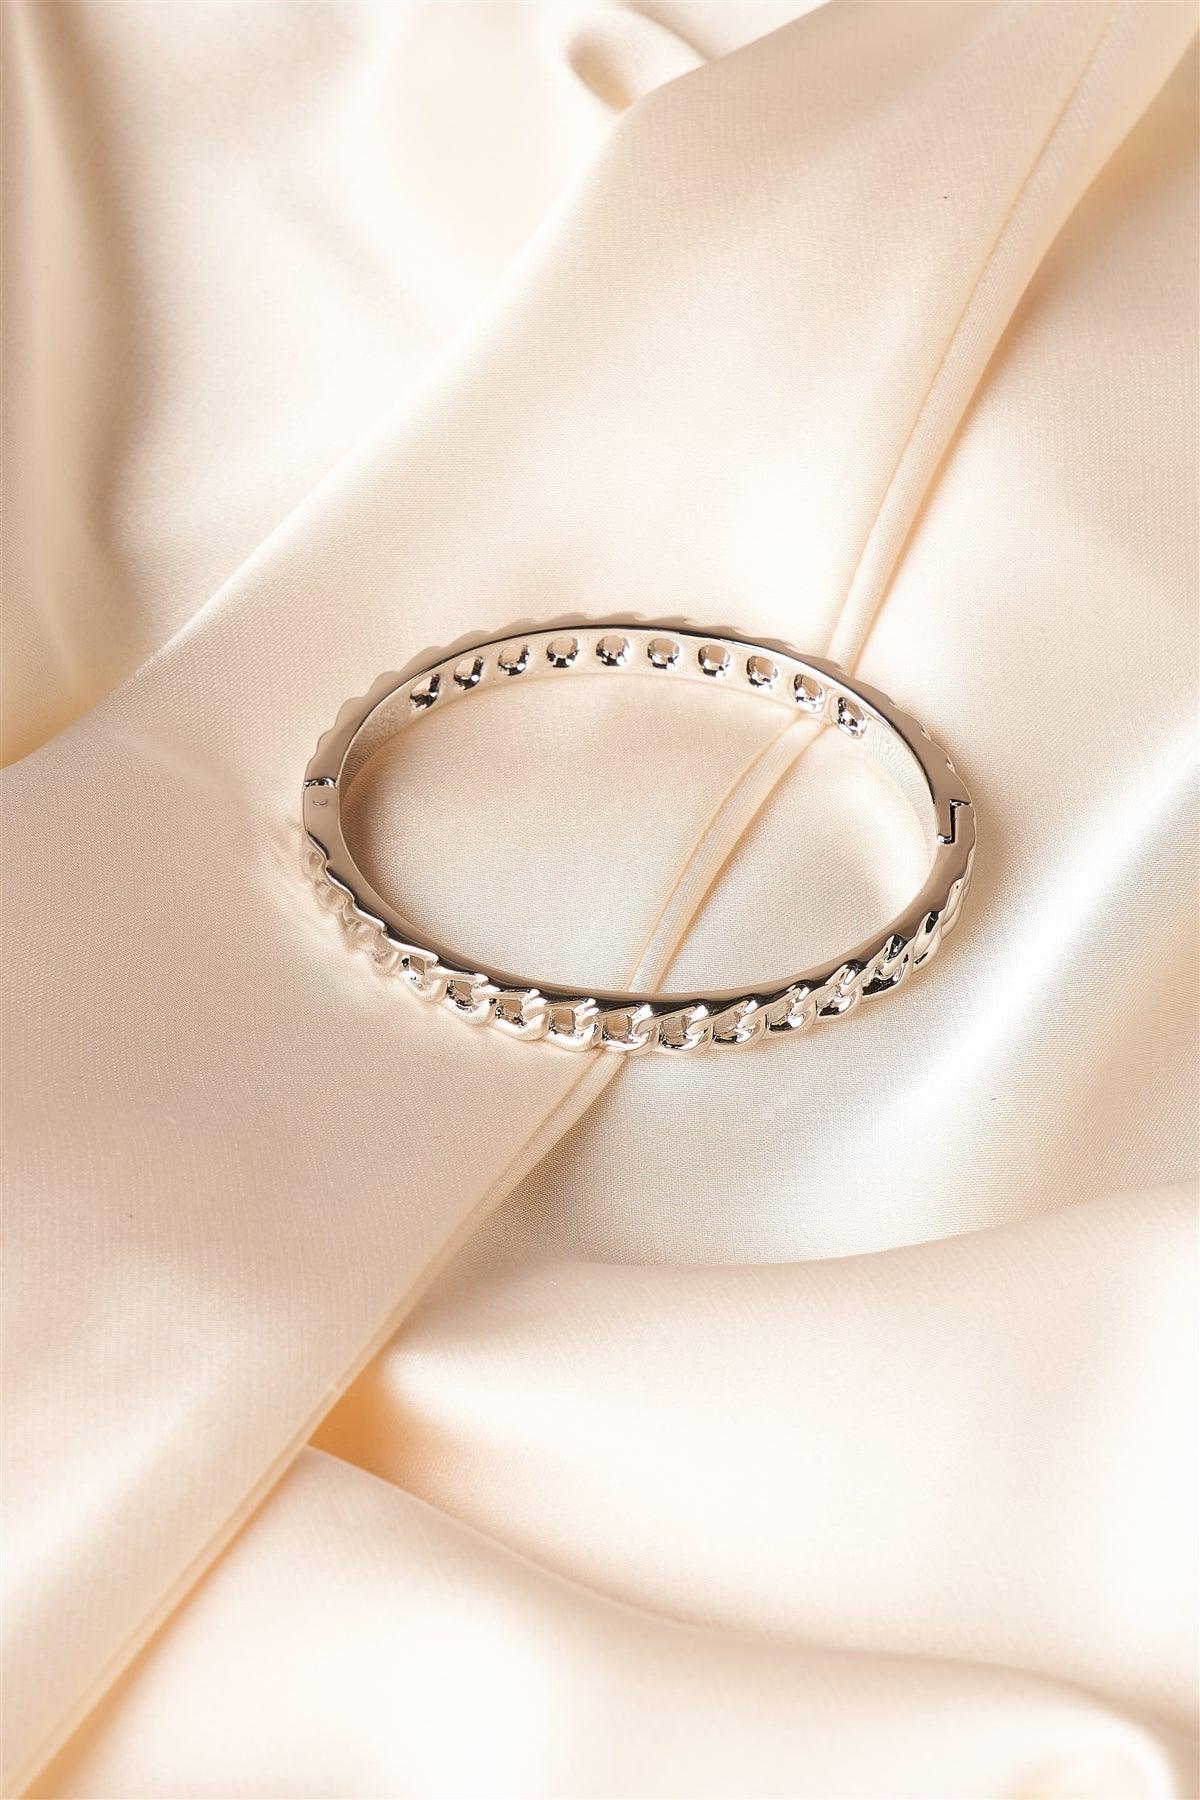 Silver Solid Chain Link Bangle Bracelet /1 Piece